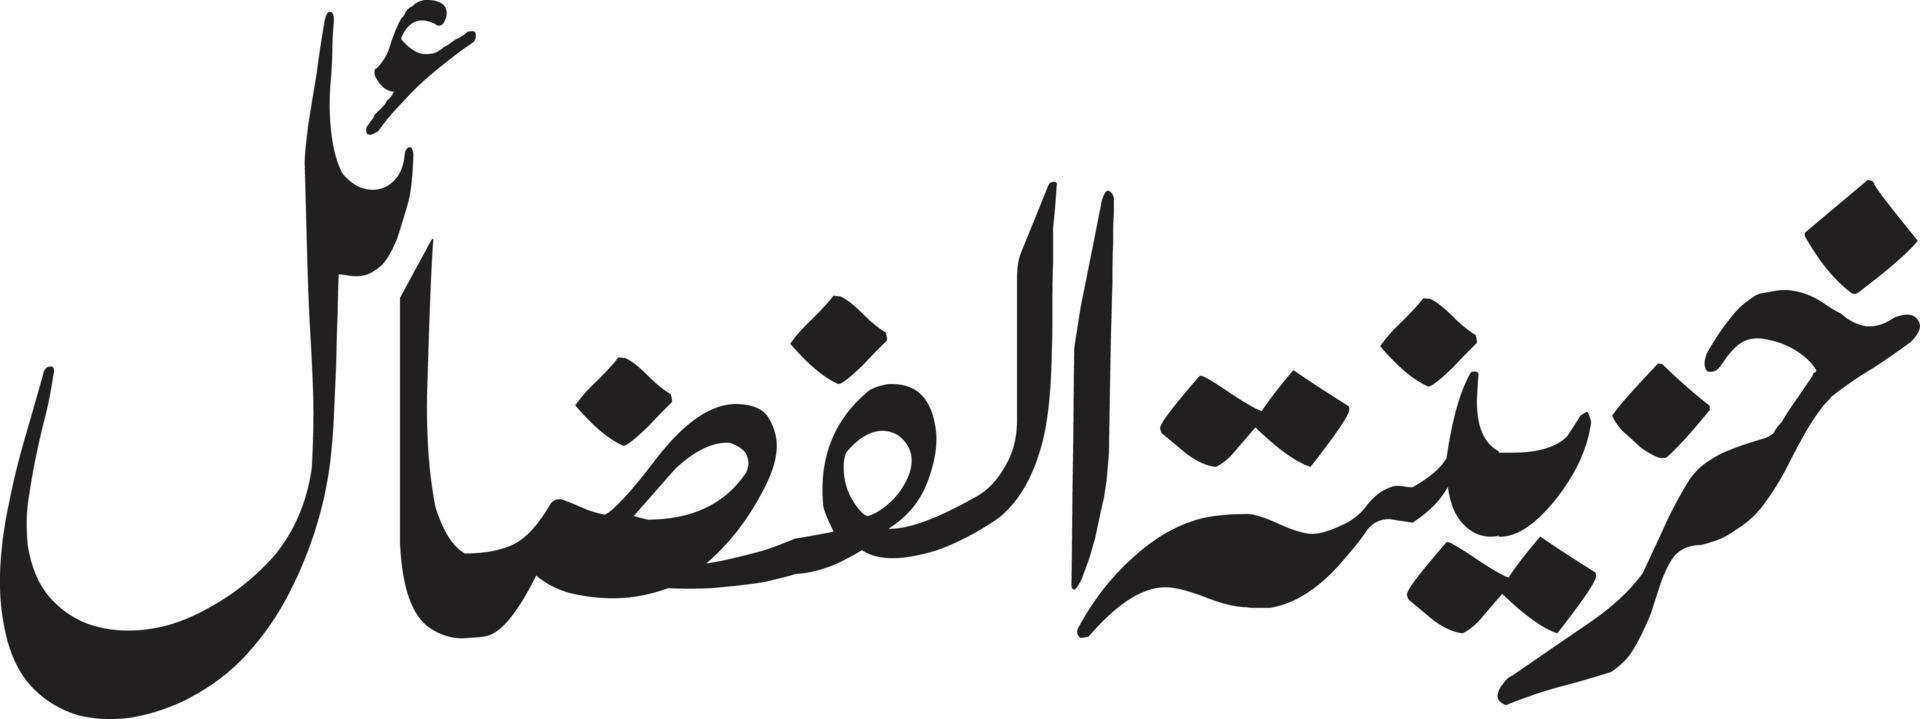 kahzeena talfzael caligrafía islámica vector libre